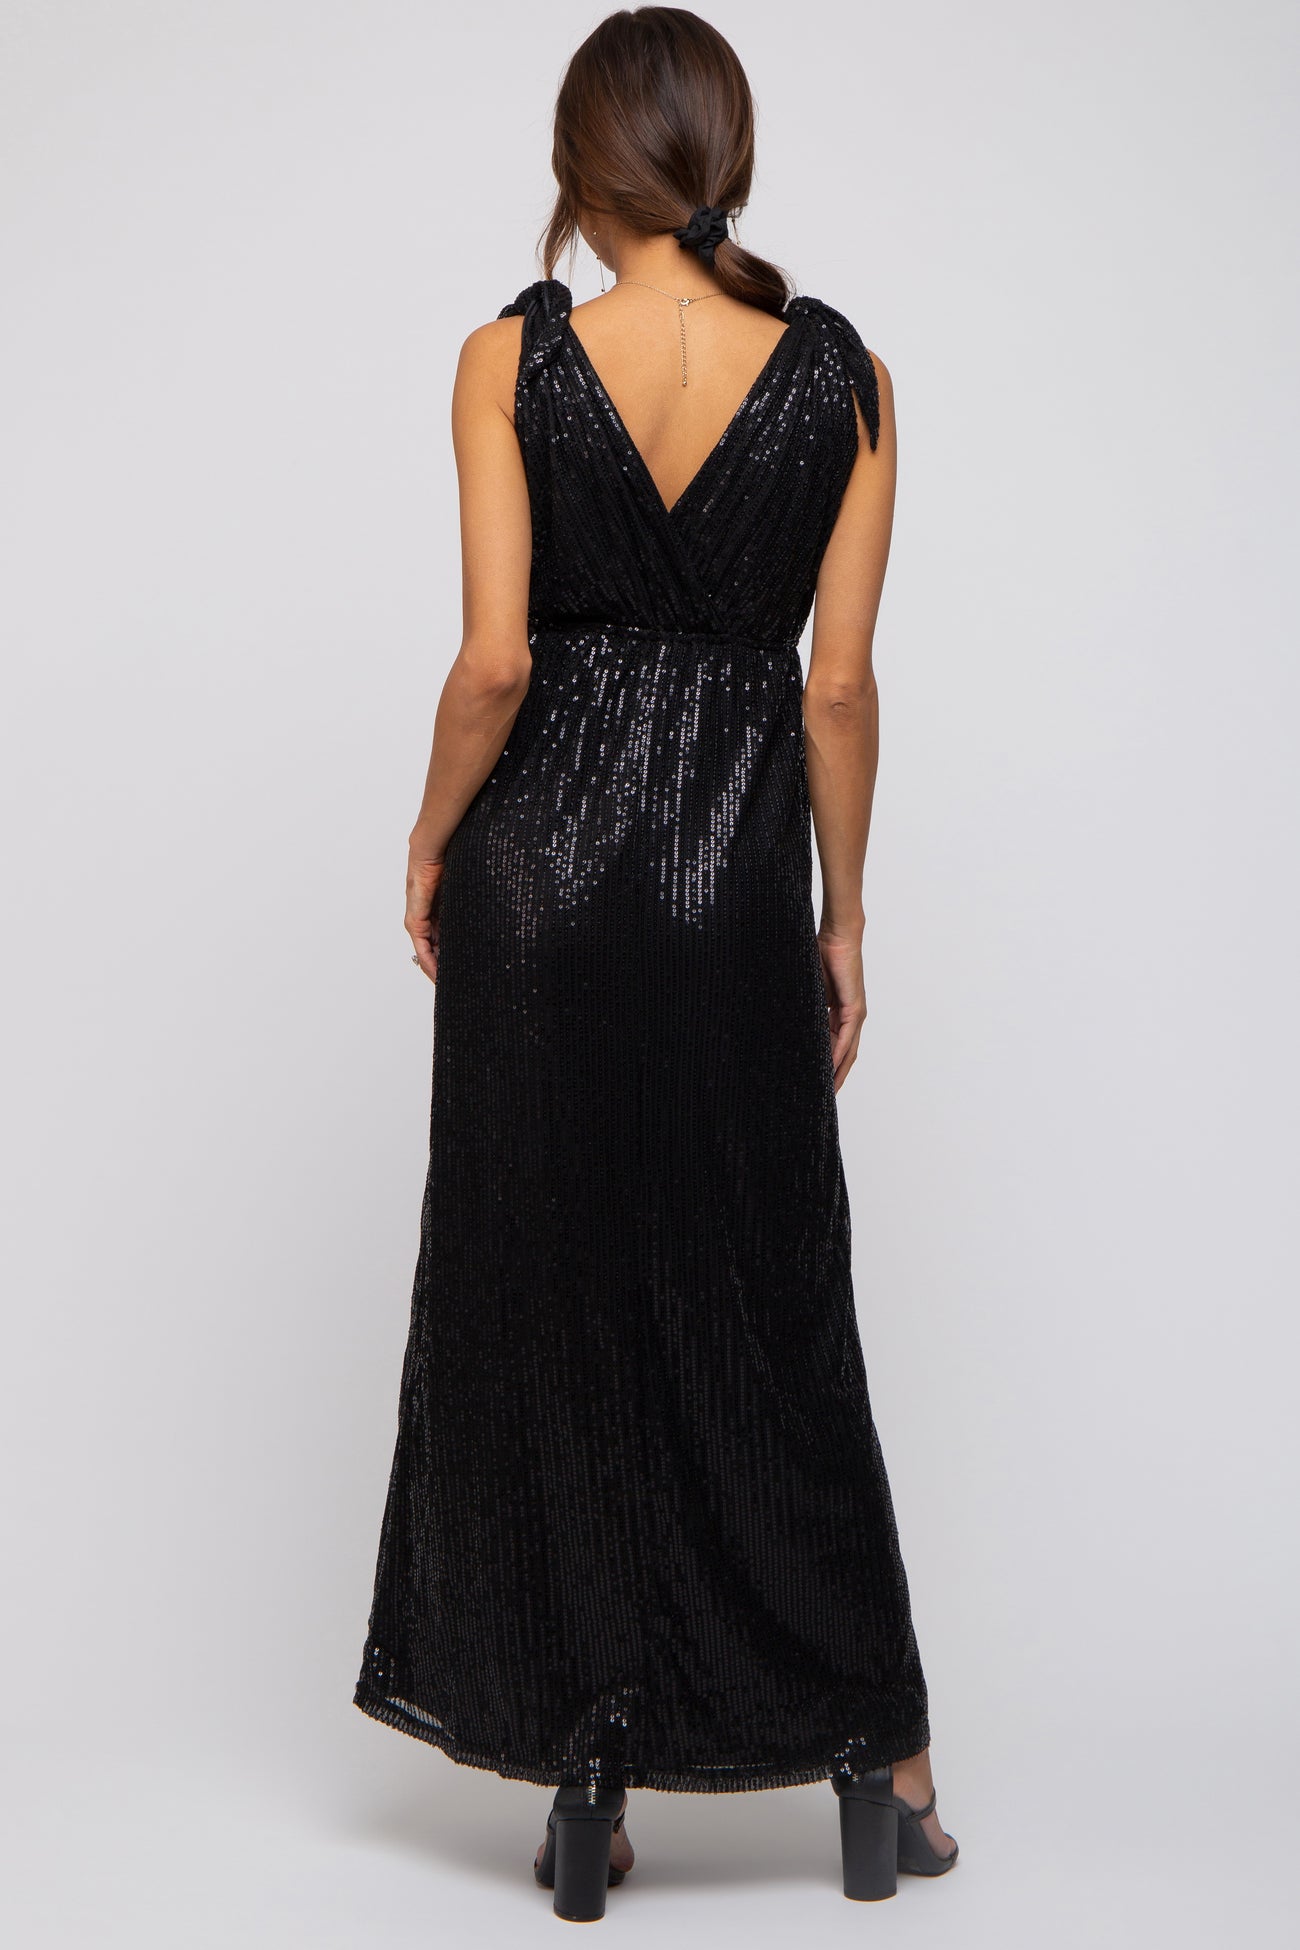 Sleeveless Sequin Beaded Black Dress - Pinktini